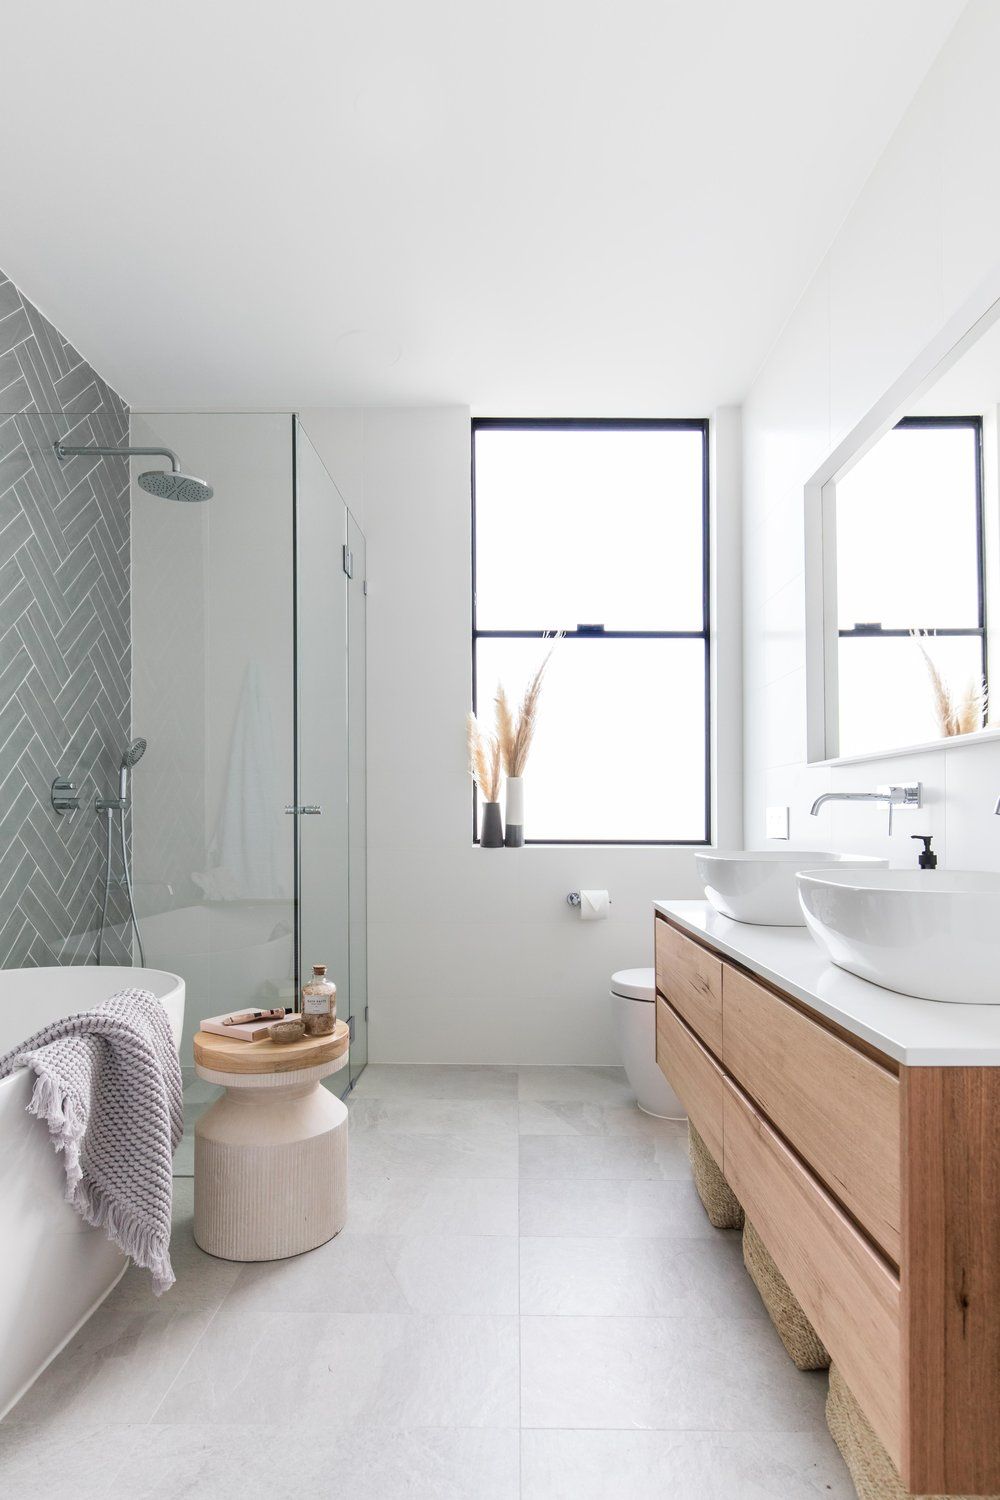 Bathroom Floor Tiles: Elevate Your Bathroom with Stylish and Durable Floor Tiles